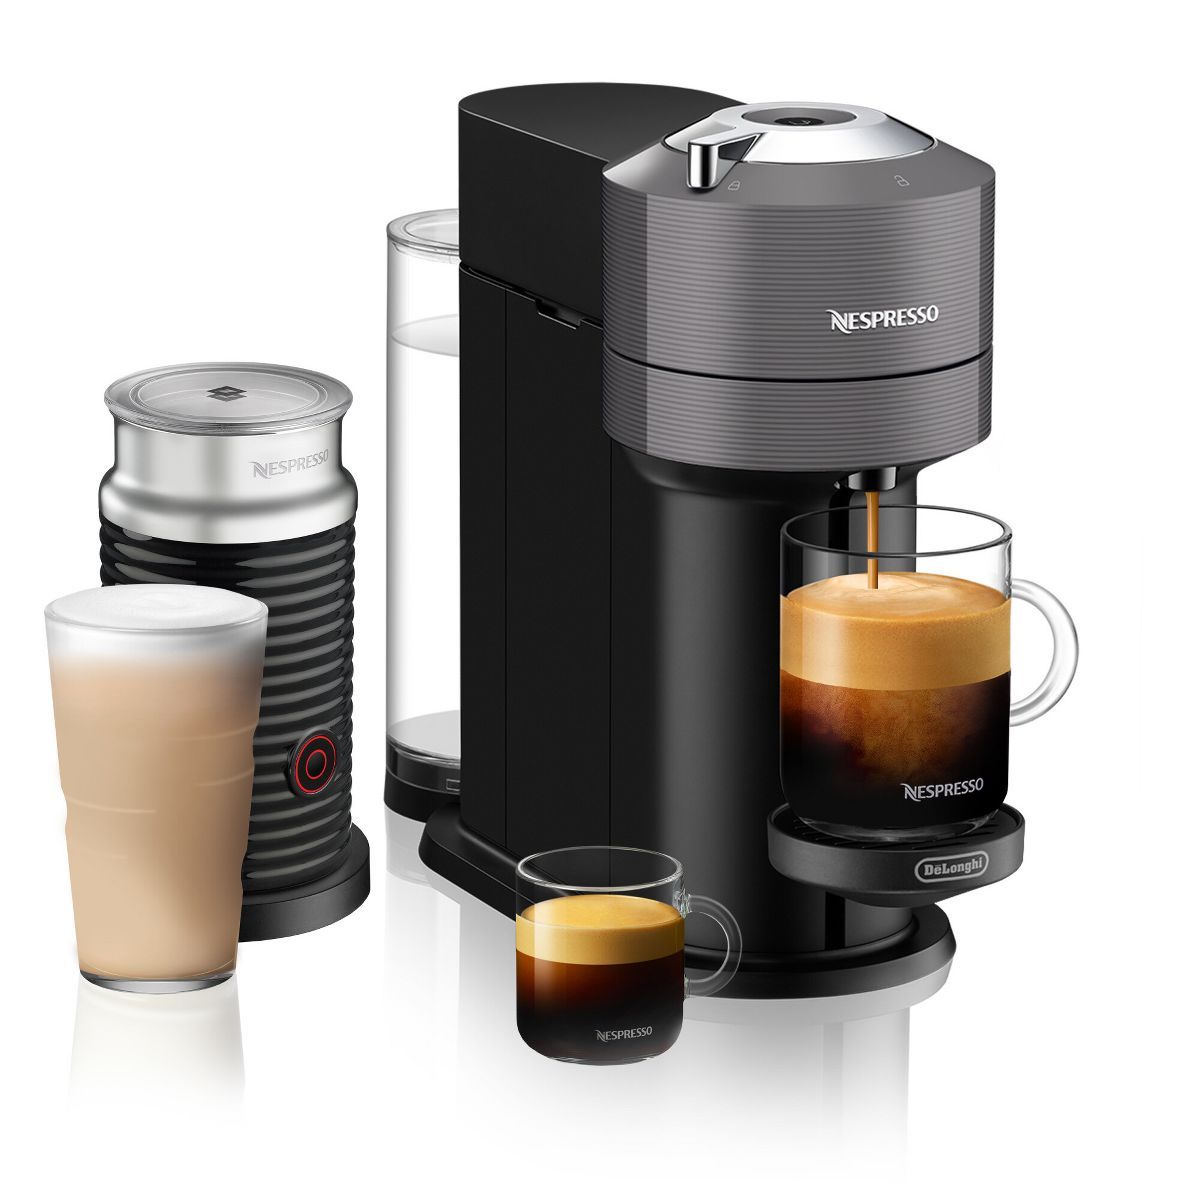 Nespresso Vertuo Next Coffee Maker and Espresso Machine Bundle by DeLonghi - Gray | Target